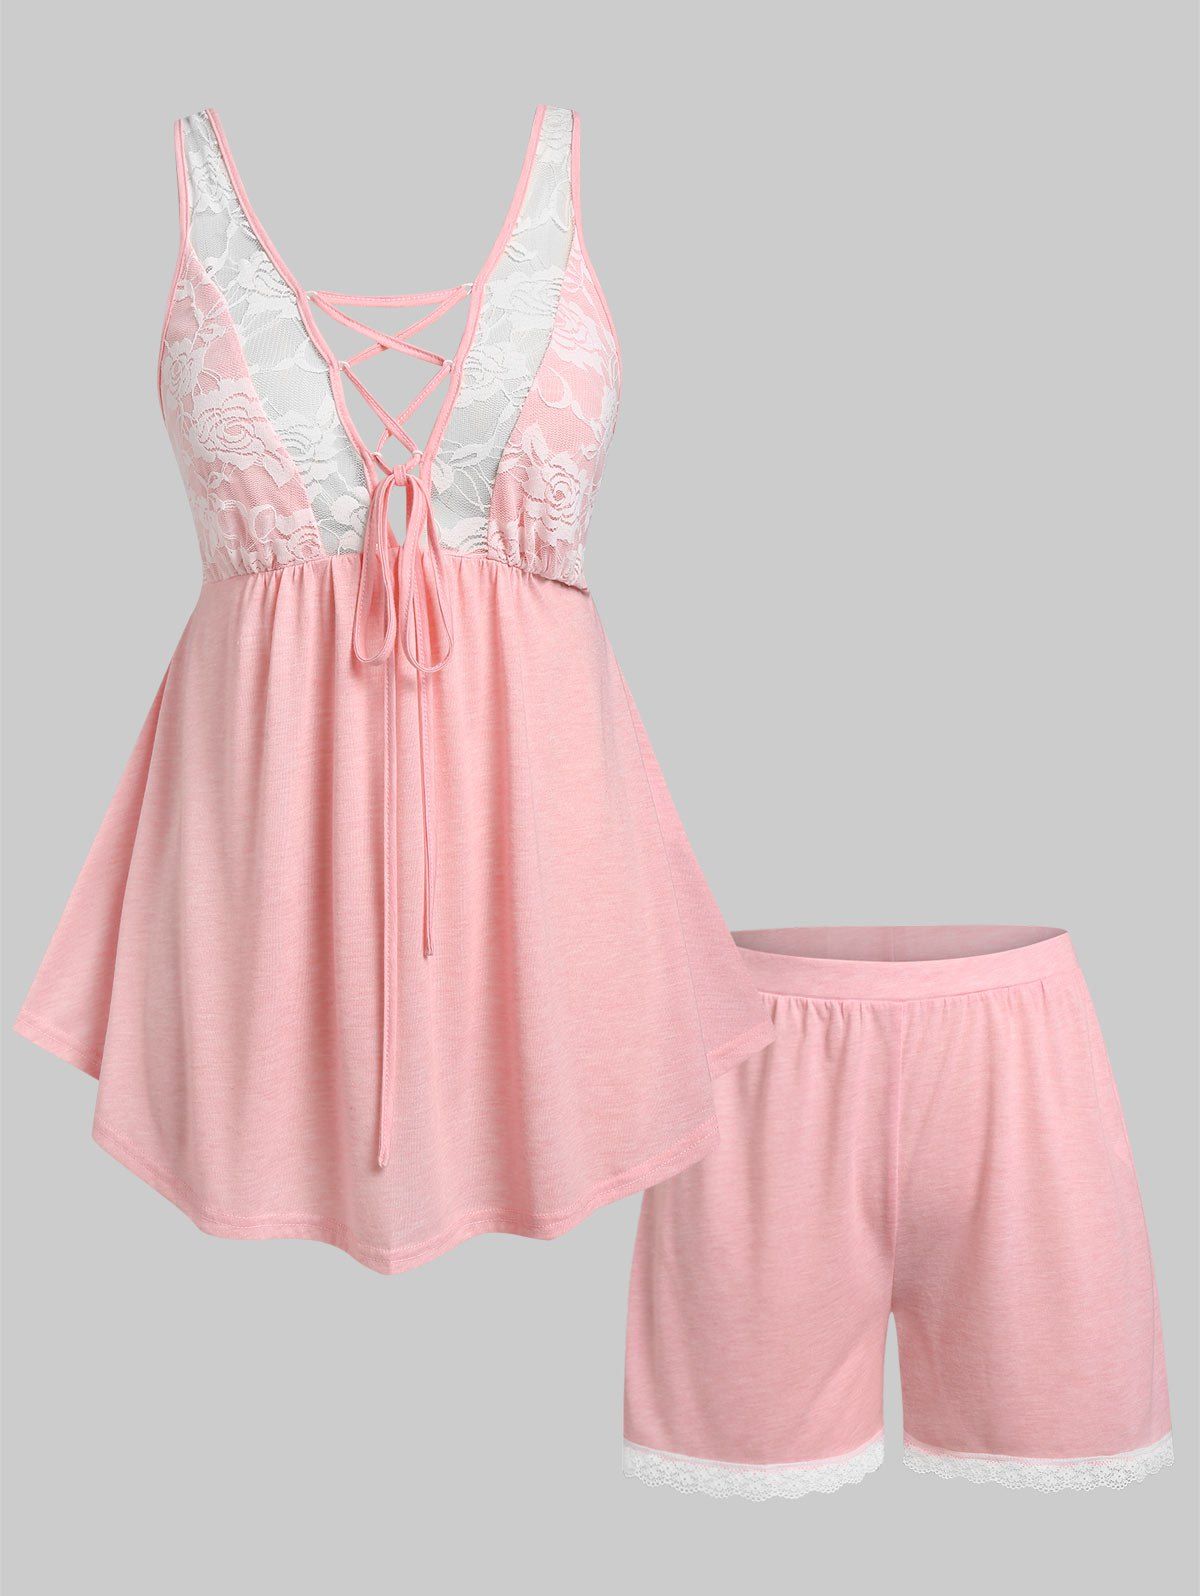 Plus Size Lace Sheer Lace-up Pajama Shorts Set - LIGHT PINK 2X